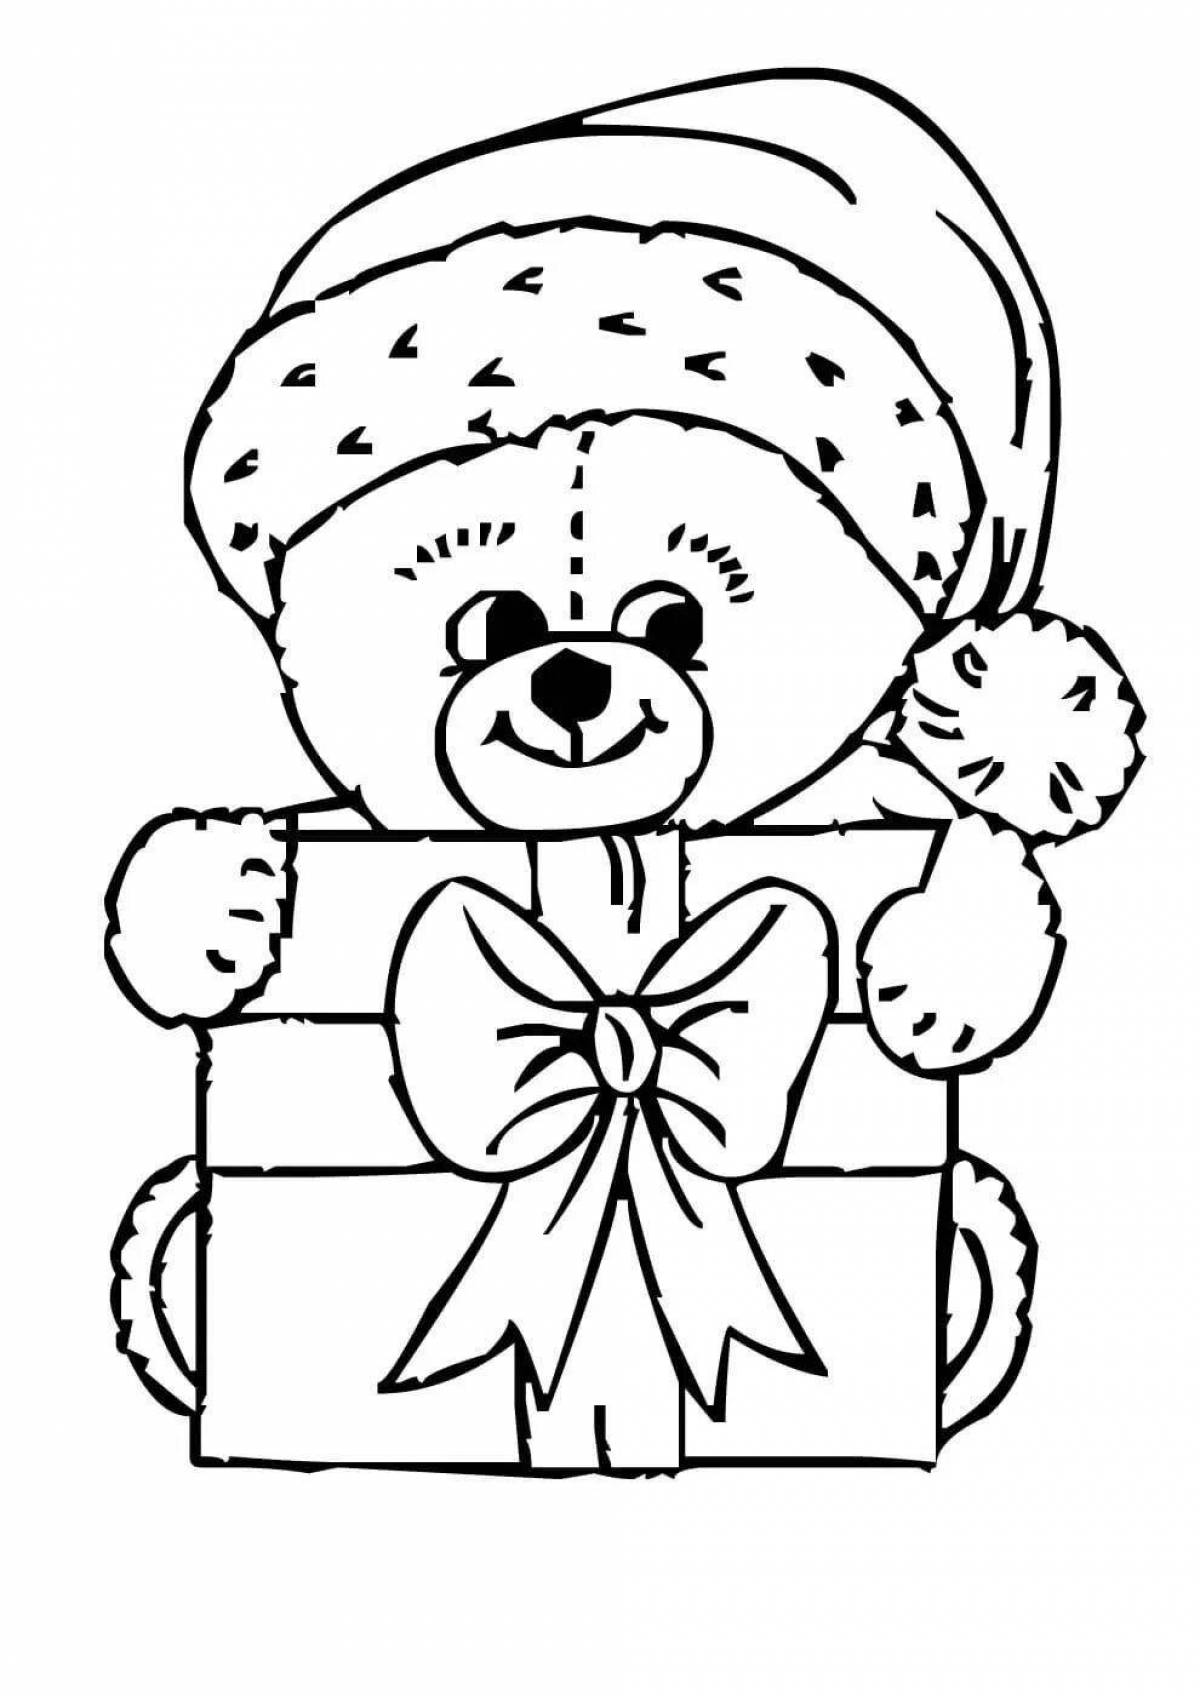 Adorable Christmas bear coloring page